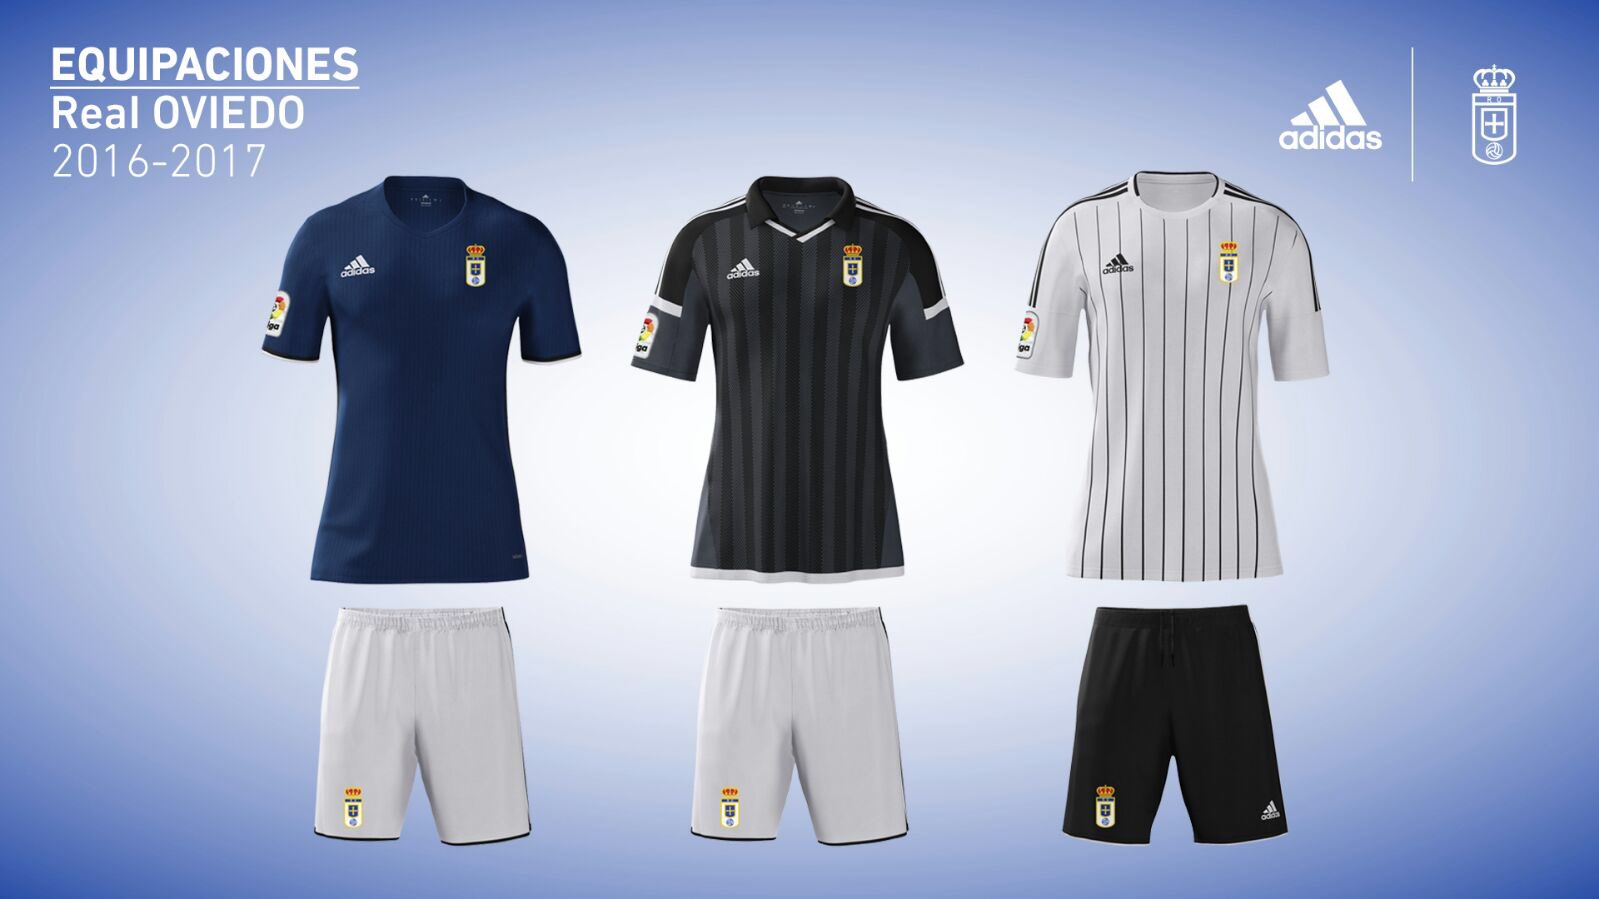 Real Oviedo 16-17 Kits Released - Footy Headlines